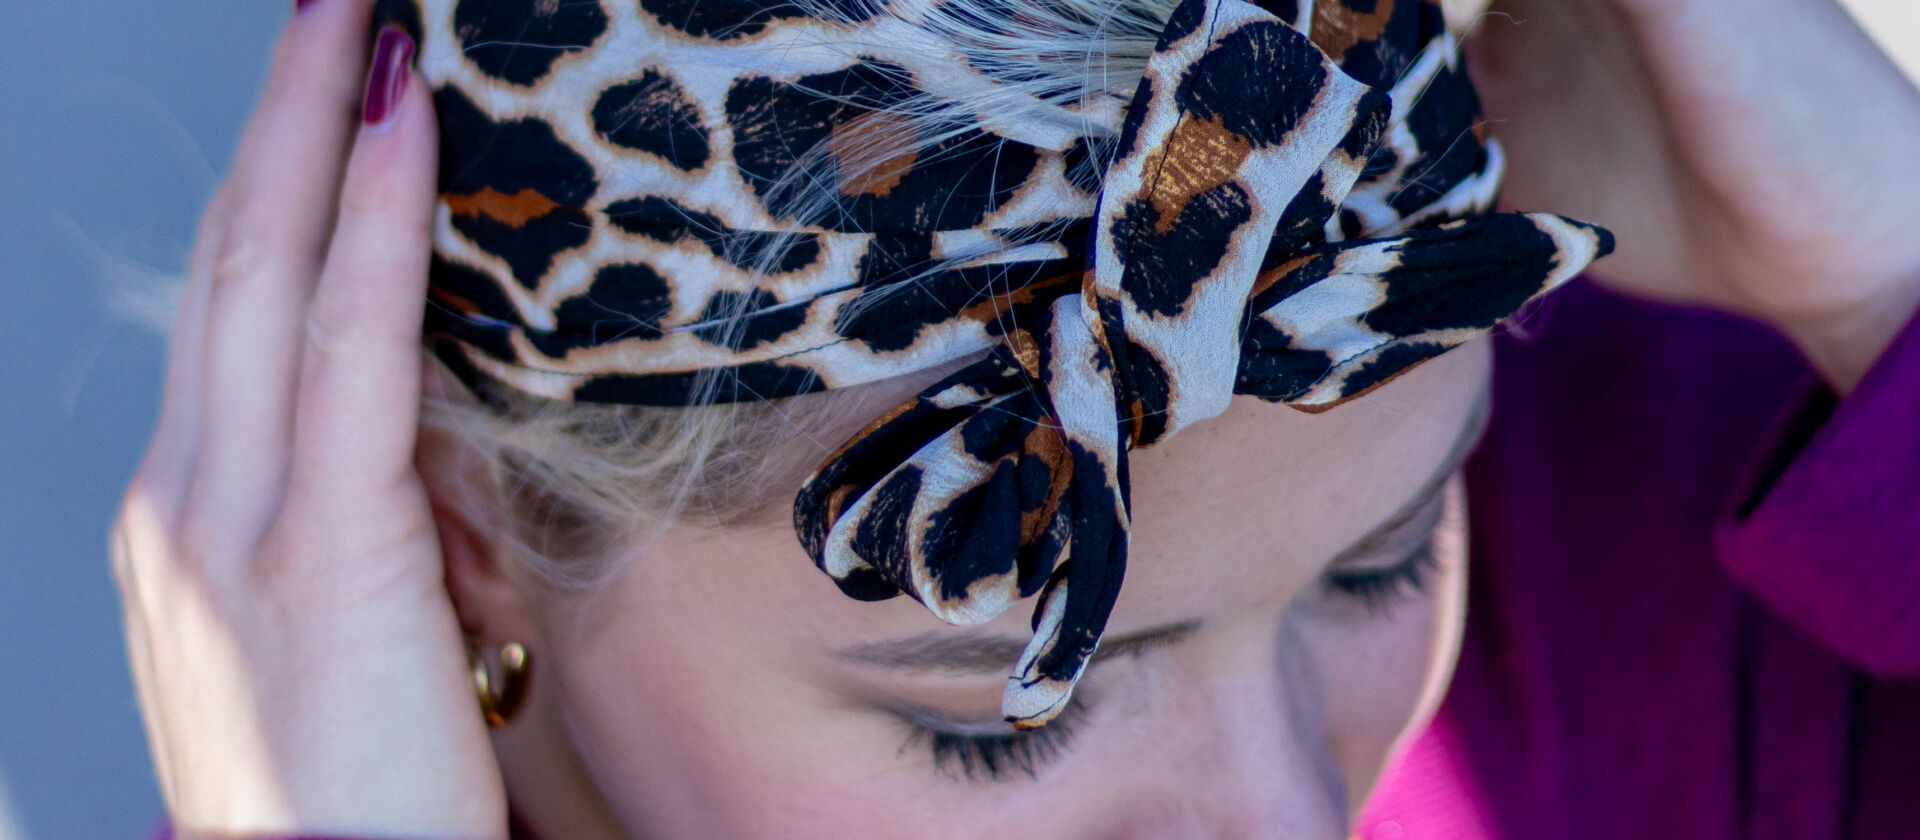 Haarband nähen Anleitung kostenlos: „Cinta“ Stirnband nähen